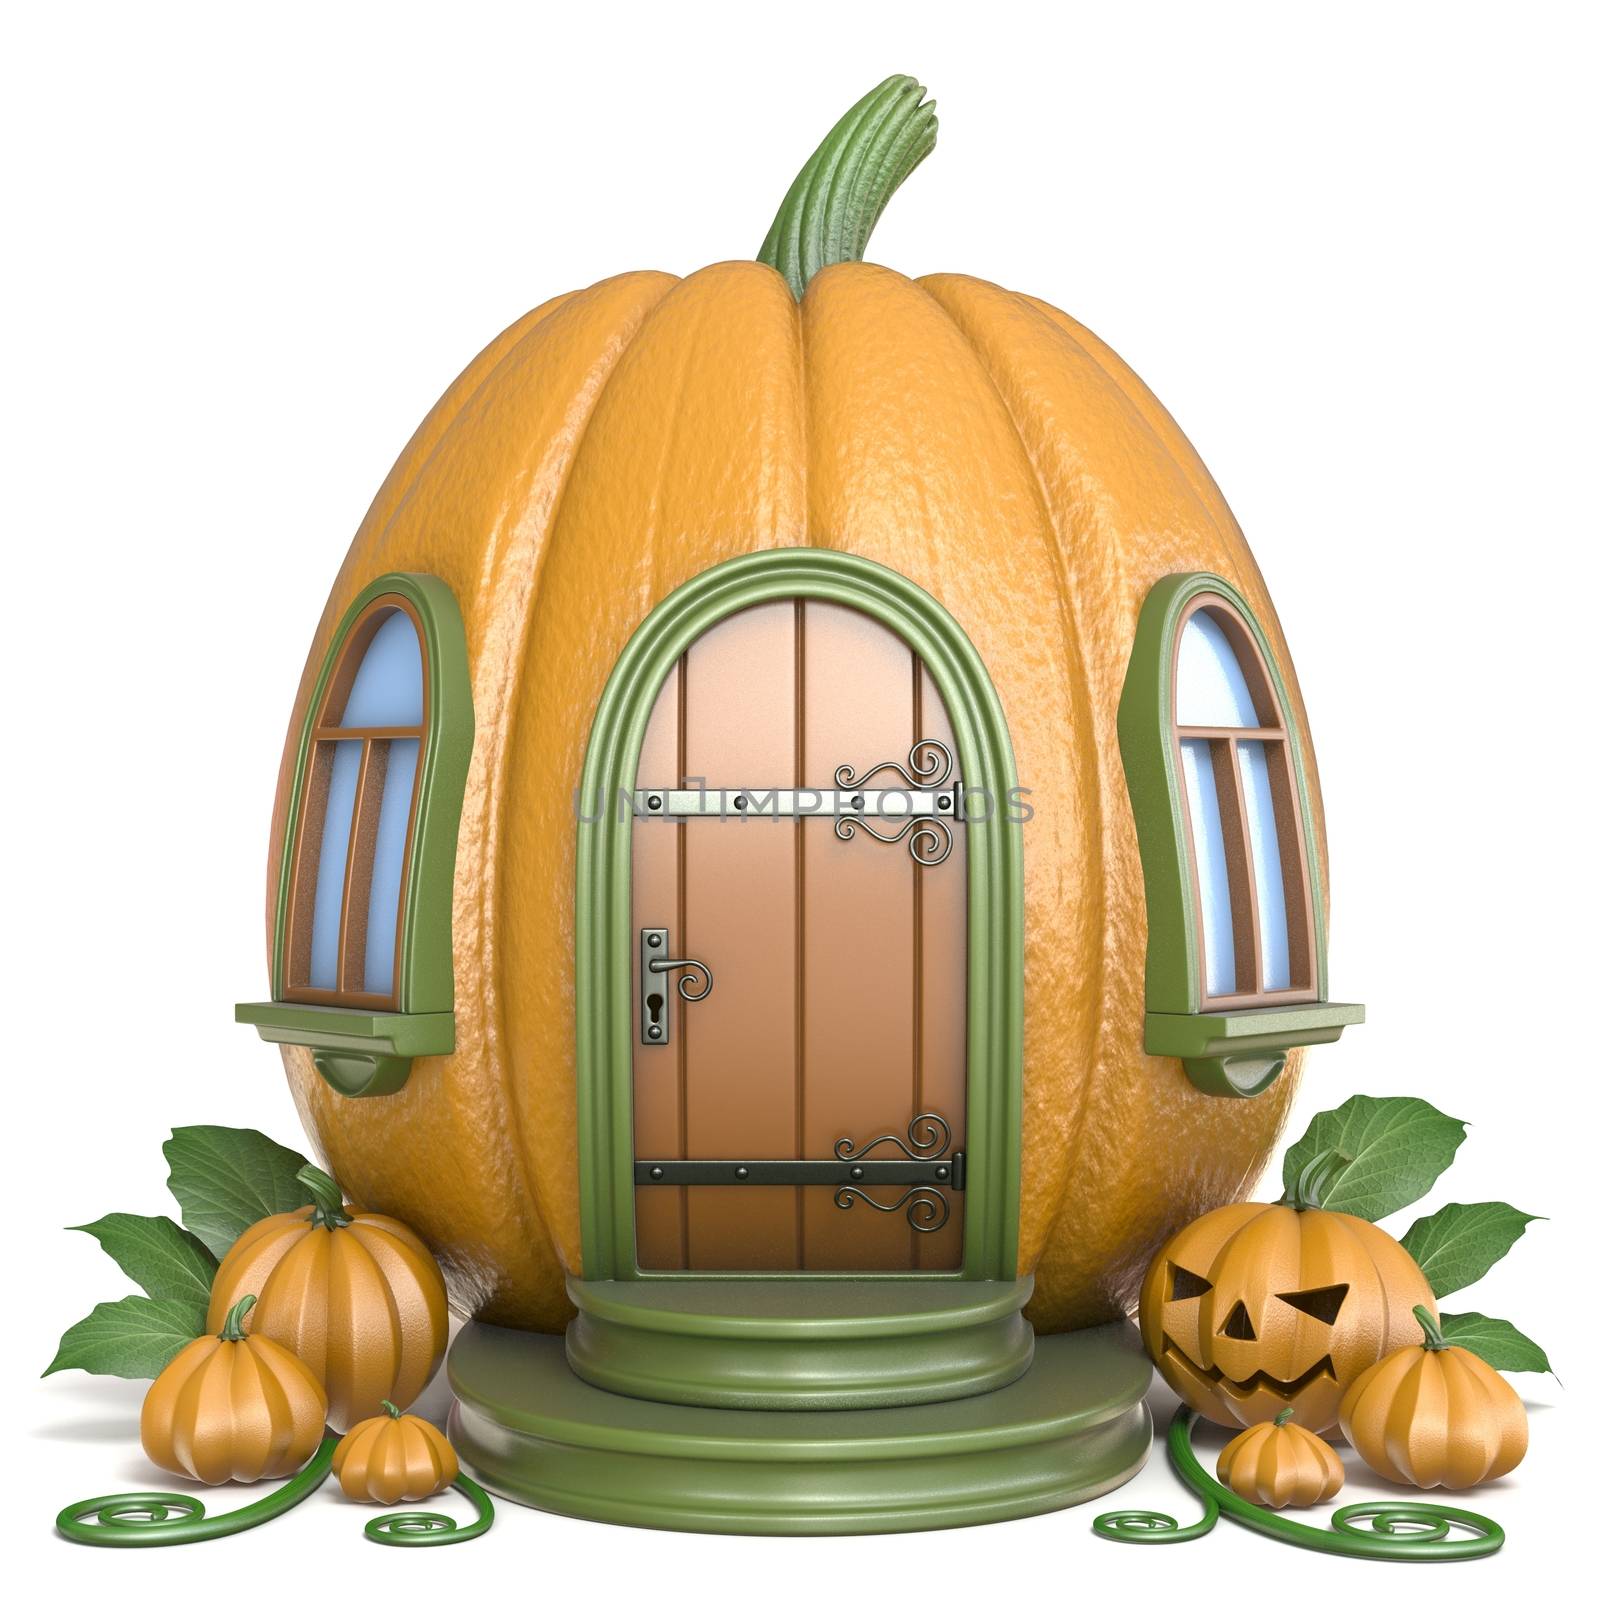 Halloween pumpkin house 3D render illustration isolated on white background